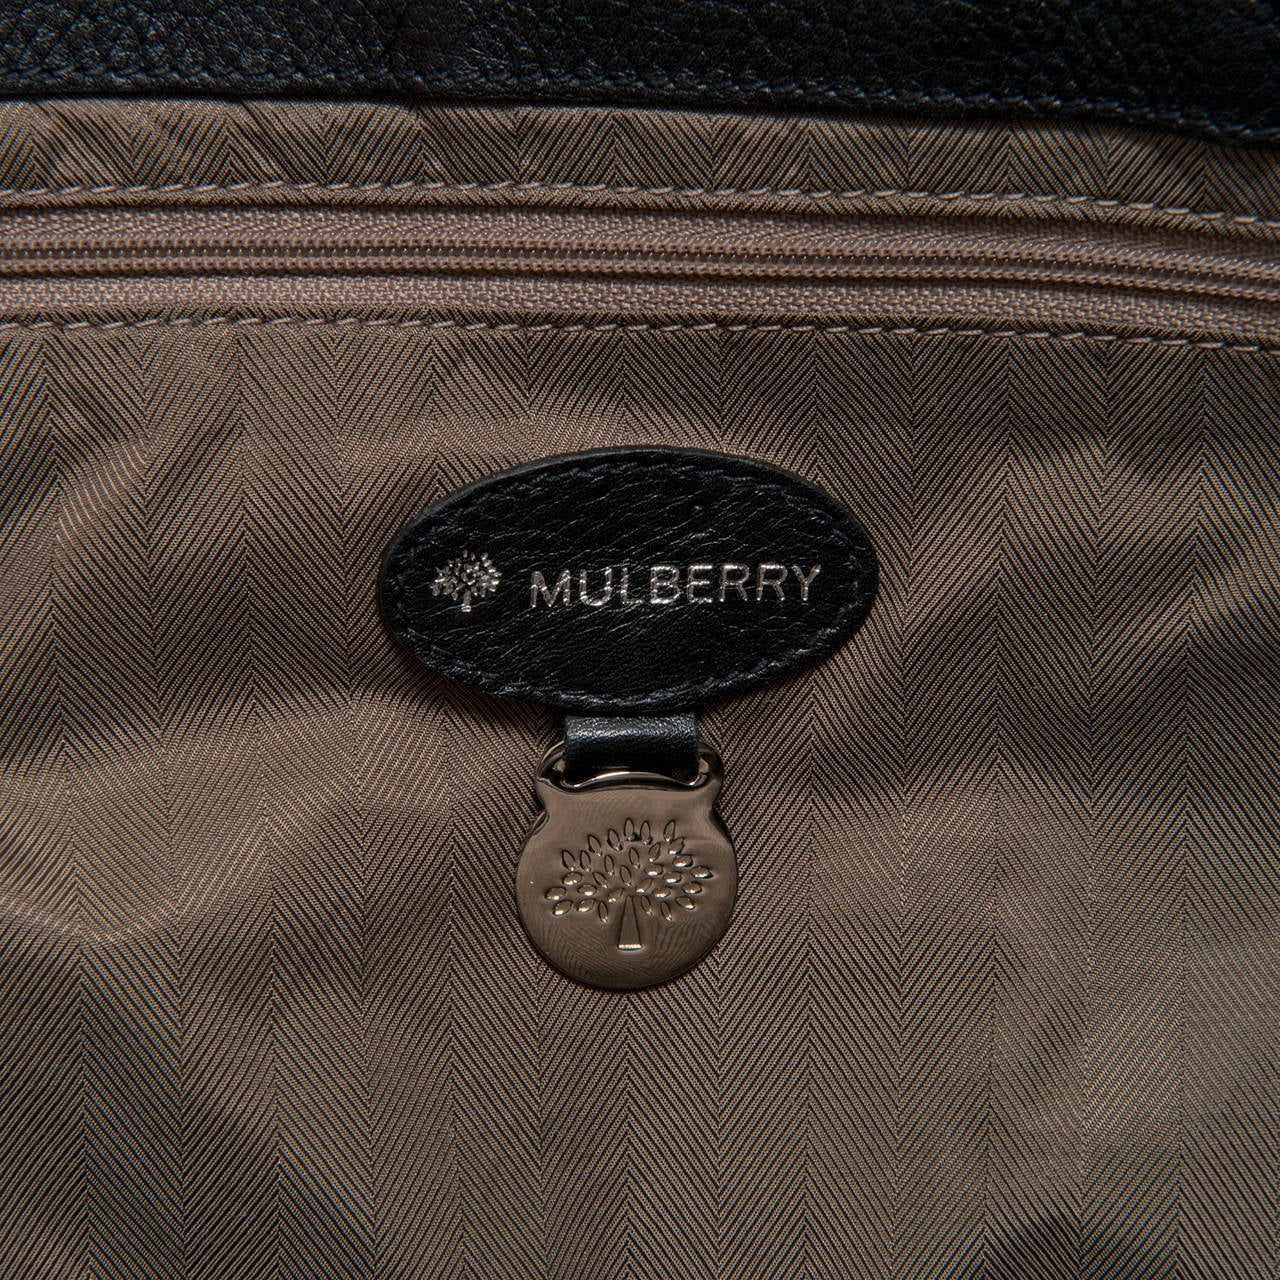 Super Large Black Shoulder/Crossbody or Travel Bag by Mulberry of England 1